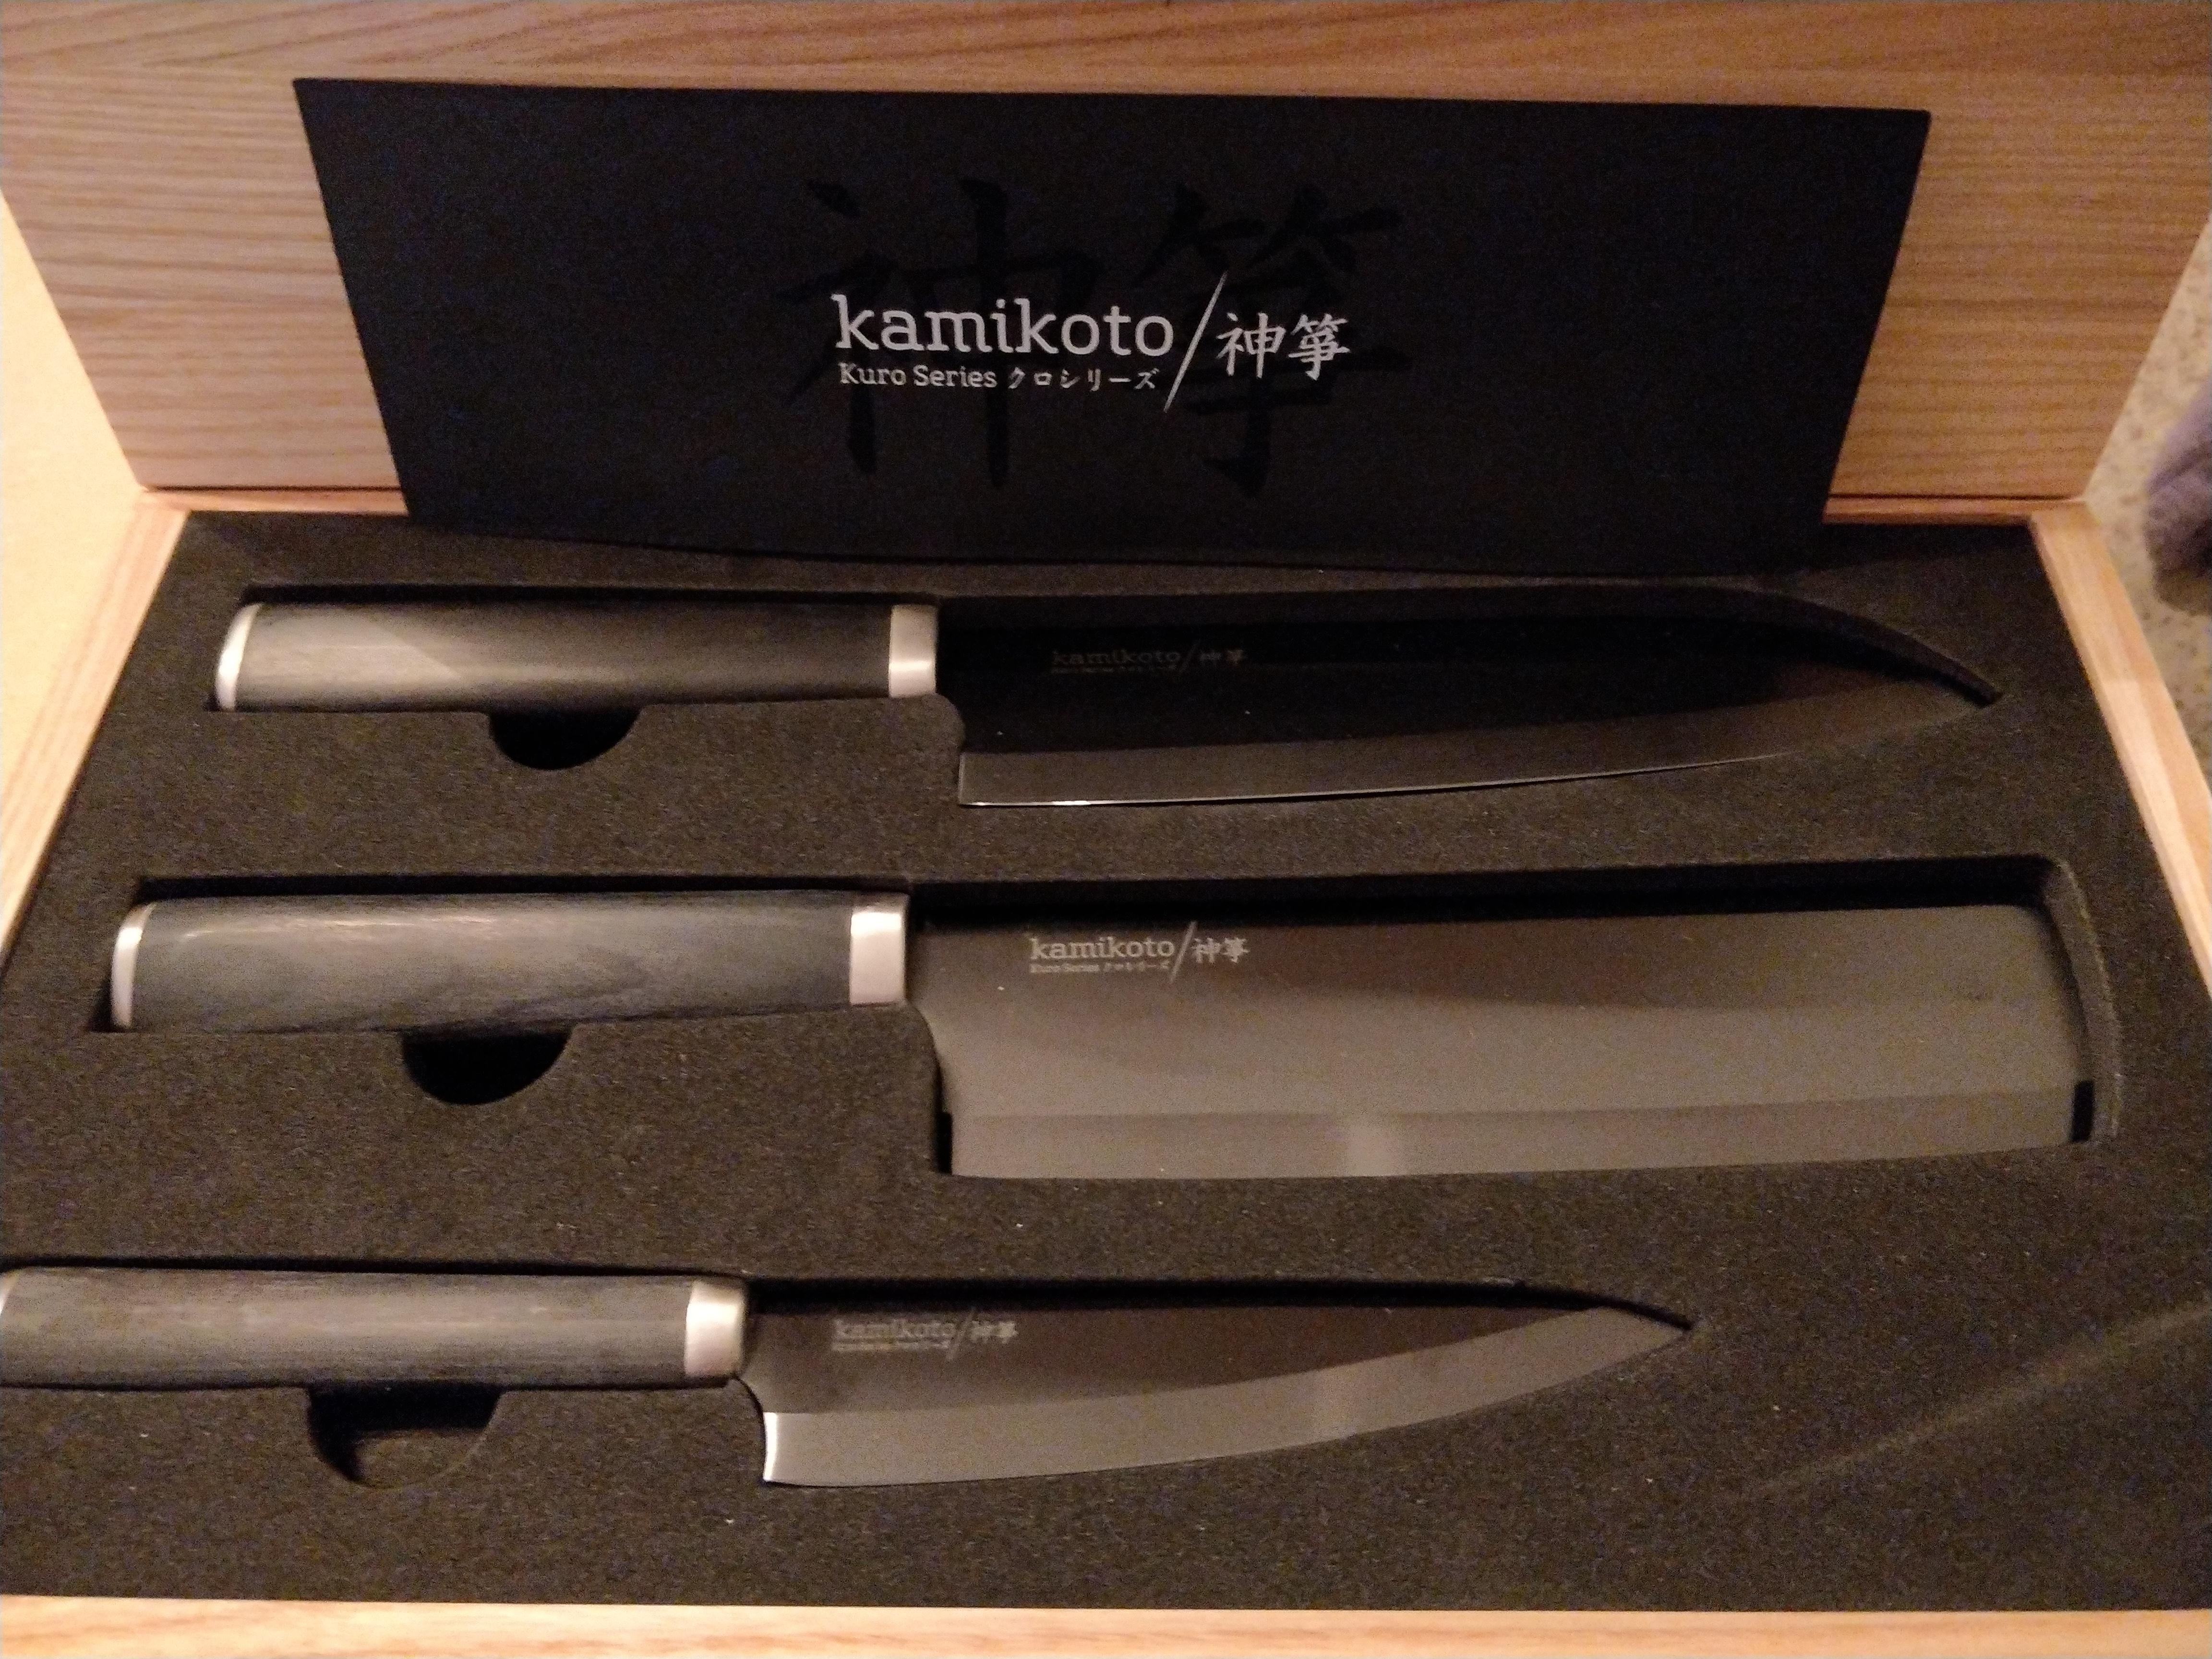 Kamikoto Knives